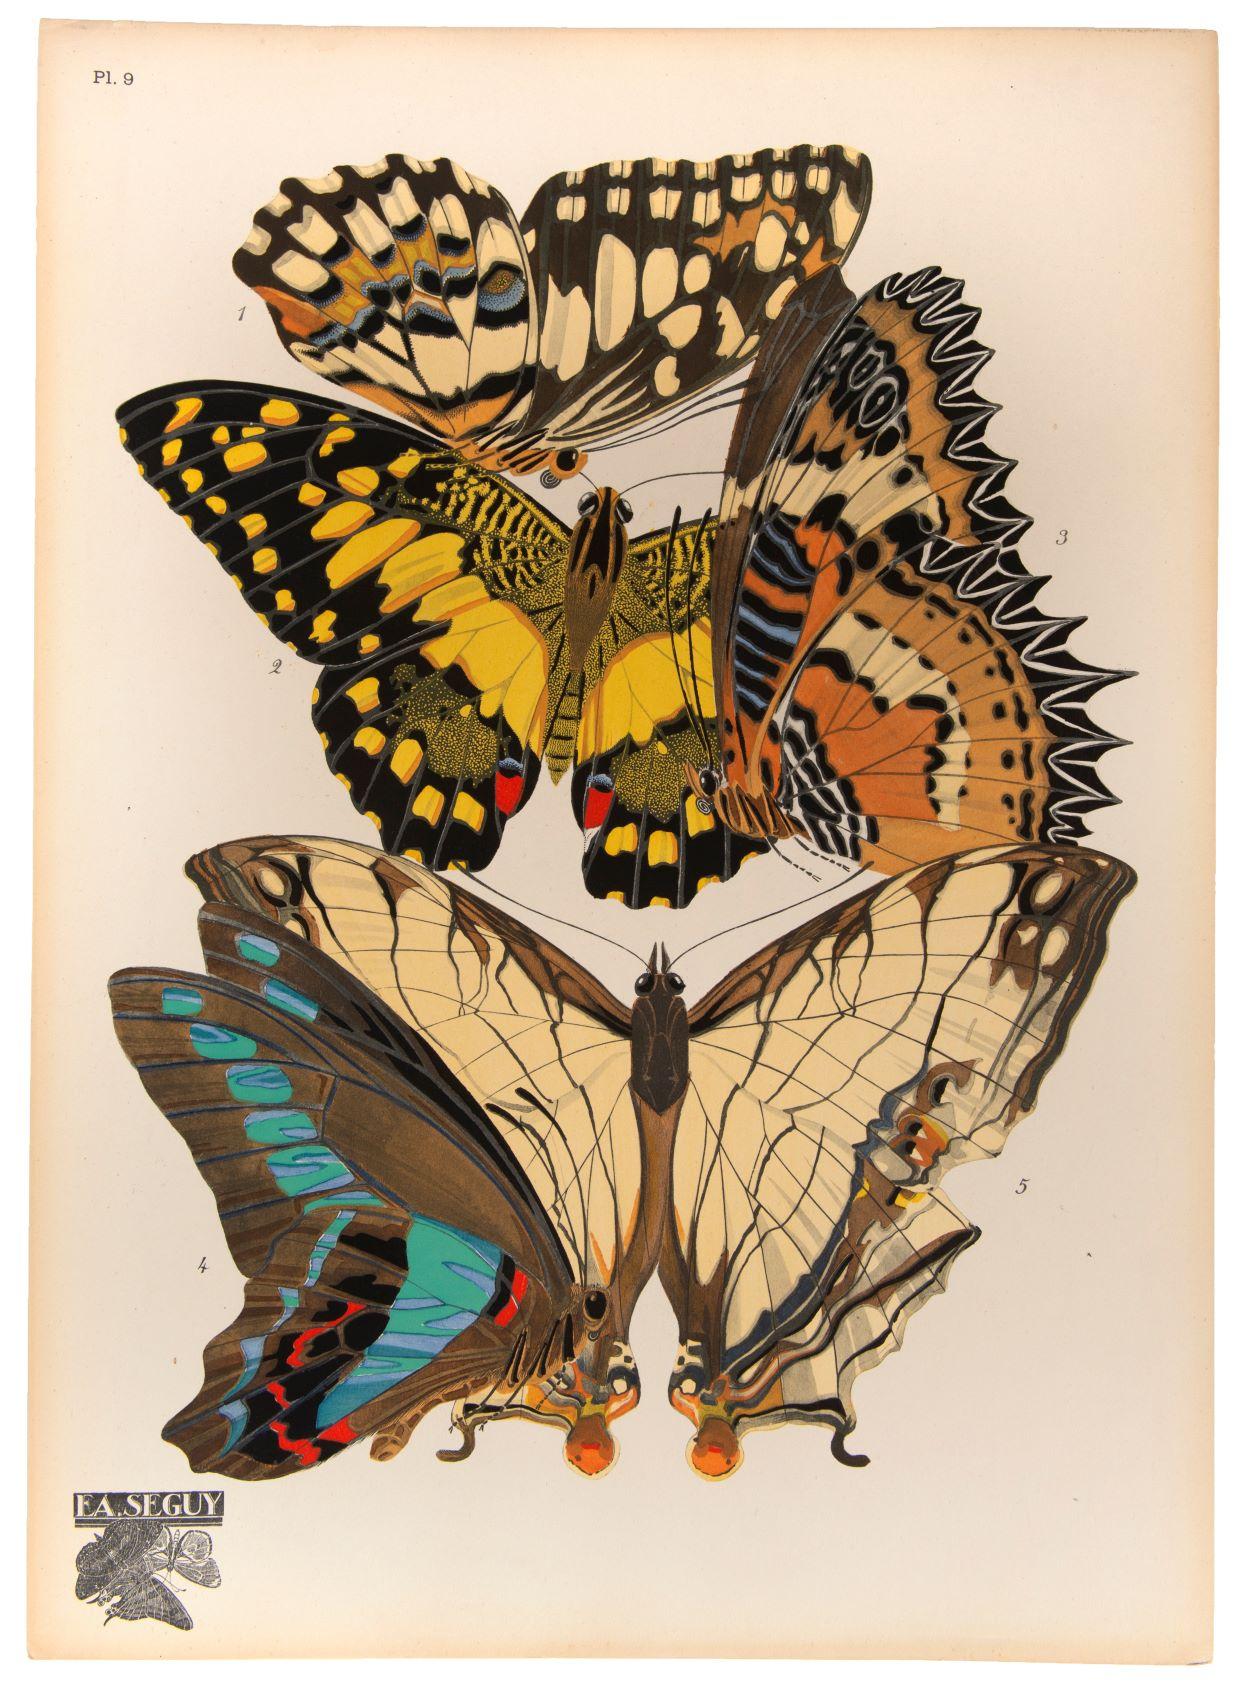 Papillons - Print de SEGUY, E[ugene] A[lain].